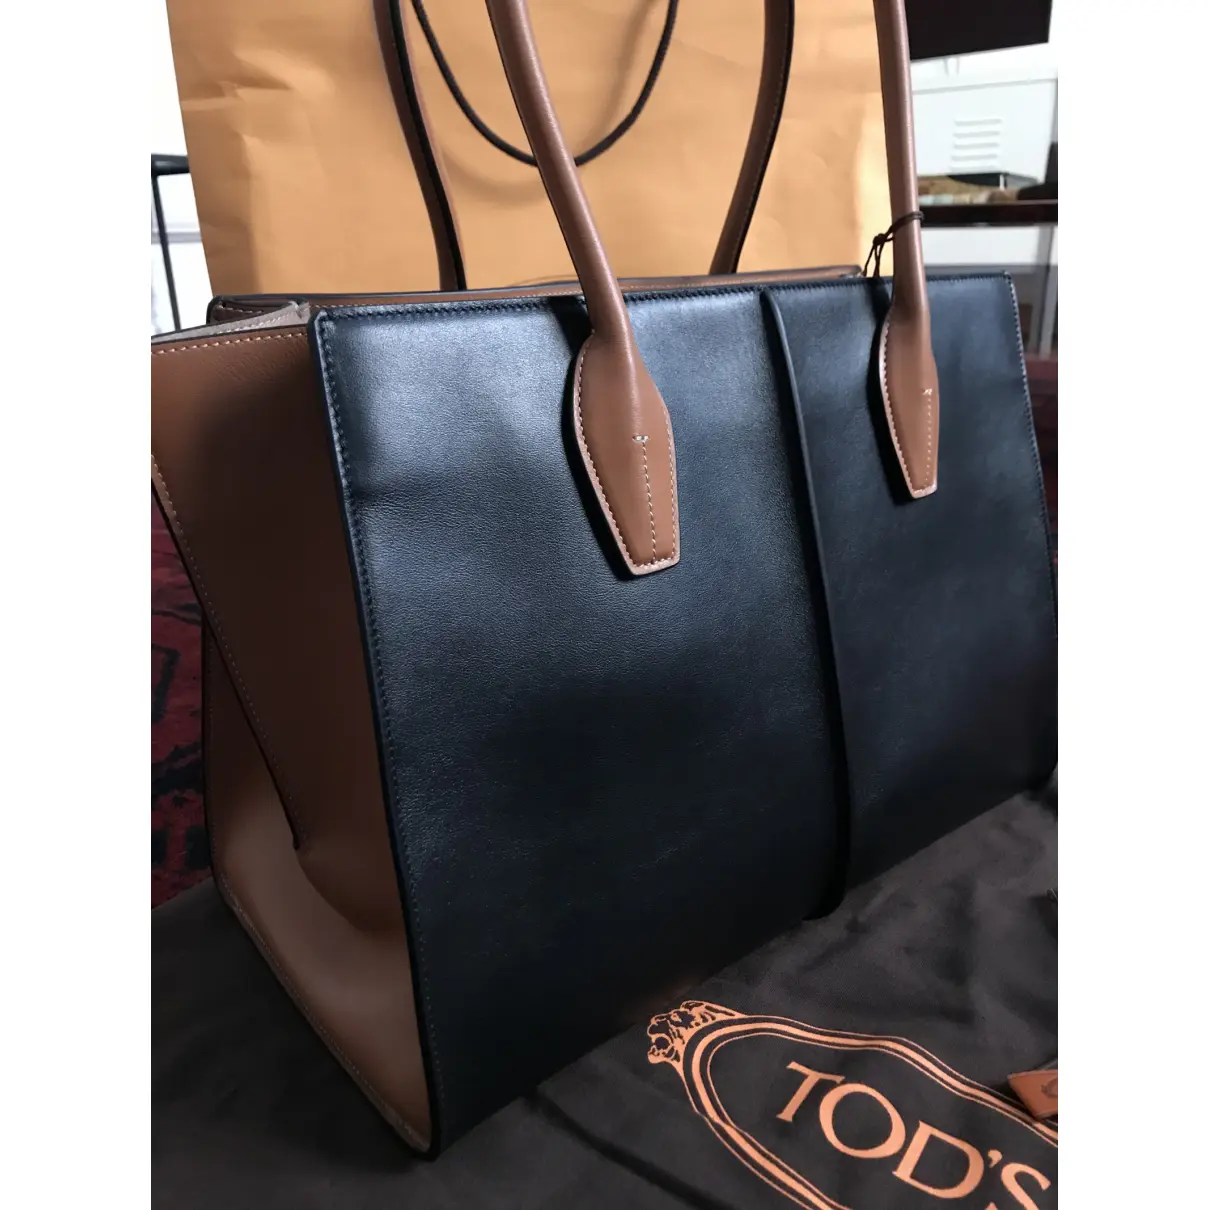 Holly leather handbag Tod's